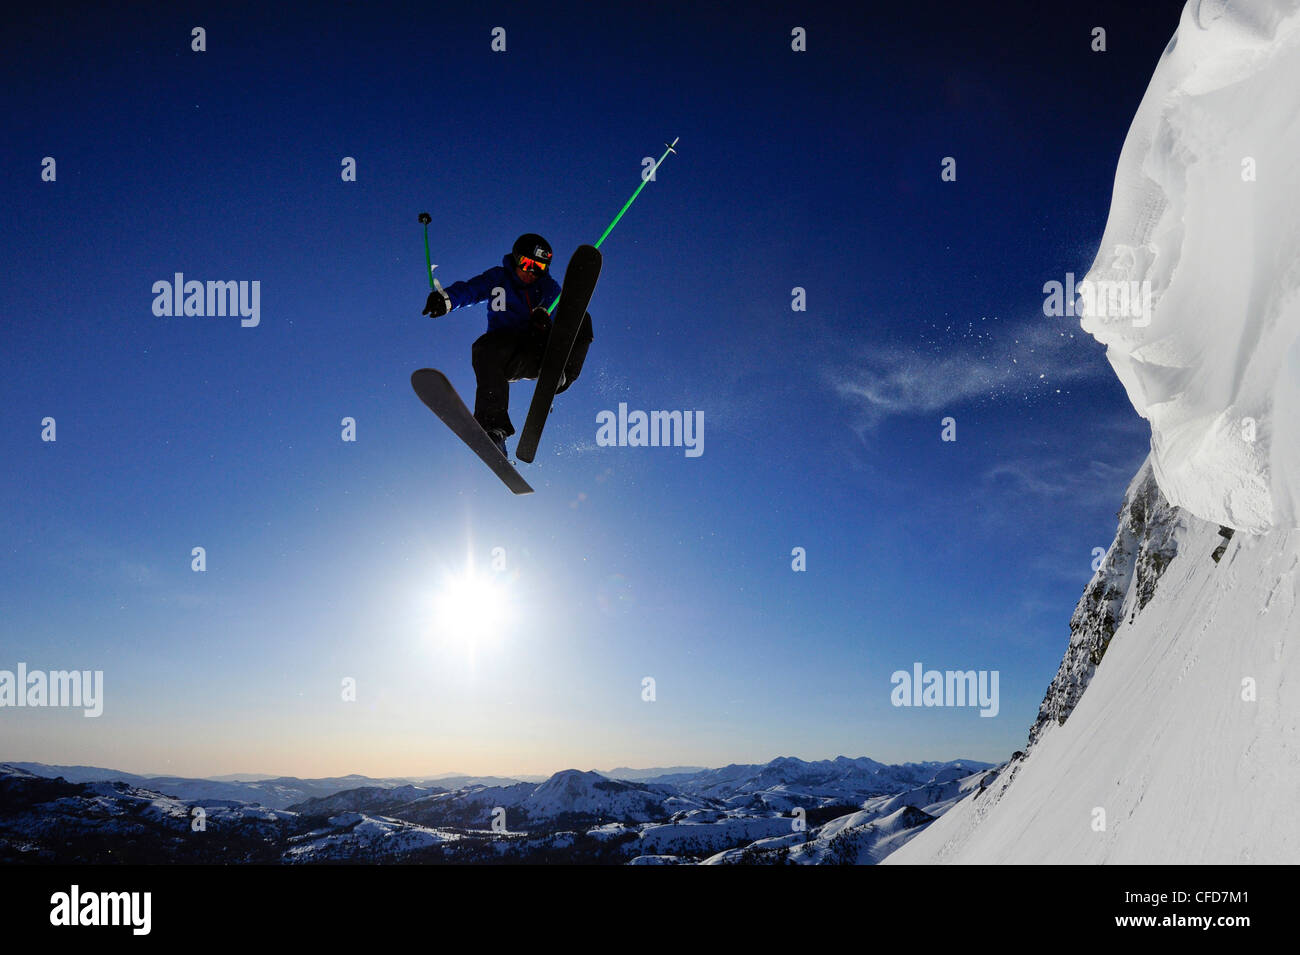 A skier soars through the air at sunrise in the Sierra Nevada mountains near Lake Tahoe, California. Stock Photo